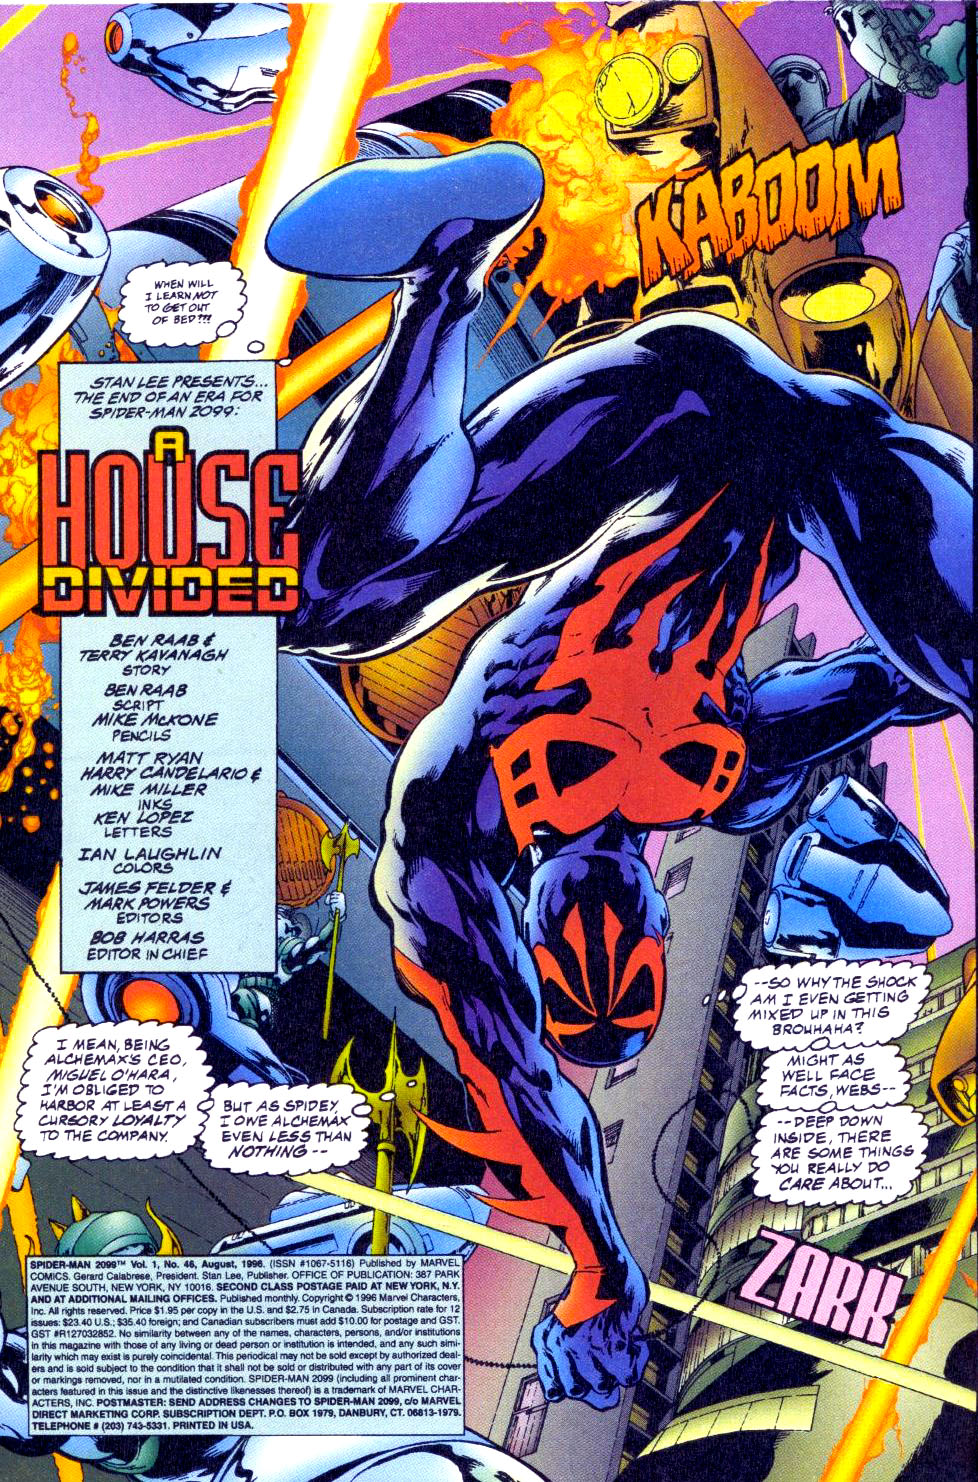 Spider-Man 2099 (1992) issue 46 - Page 3